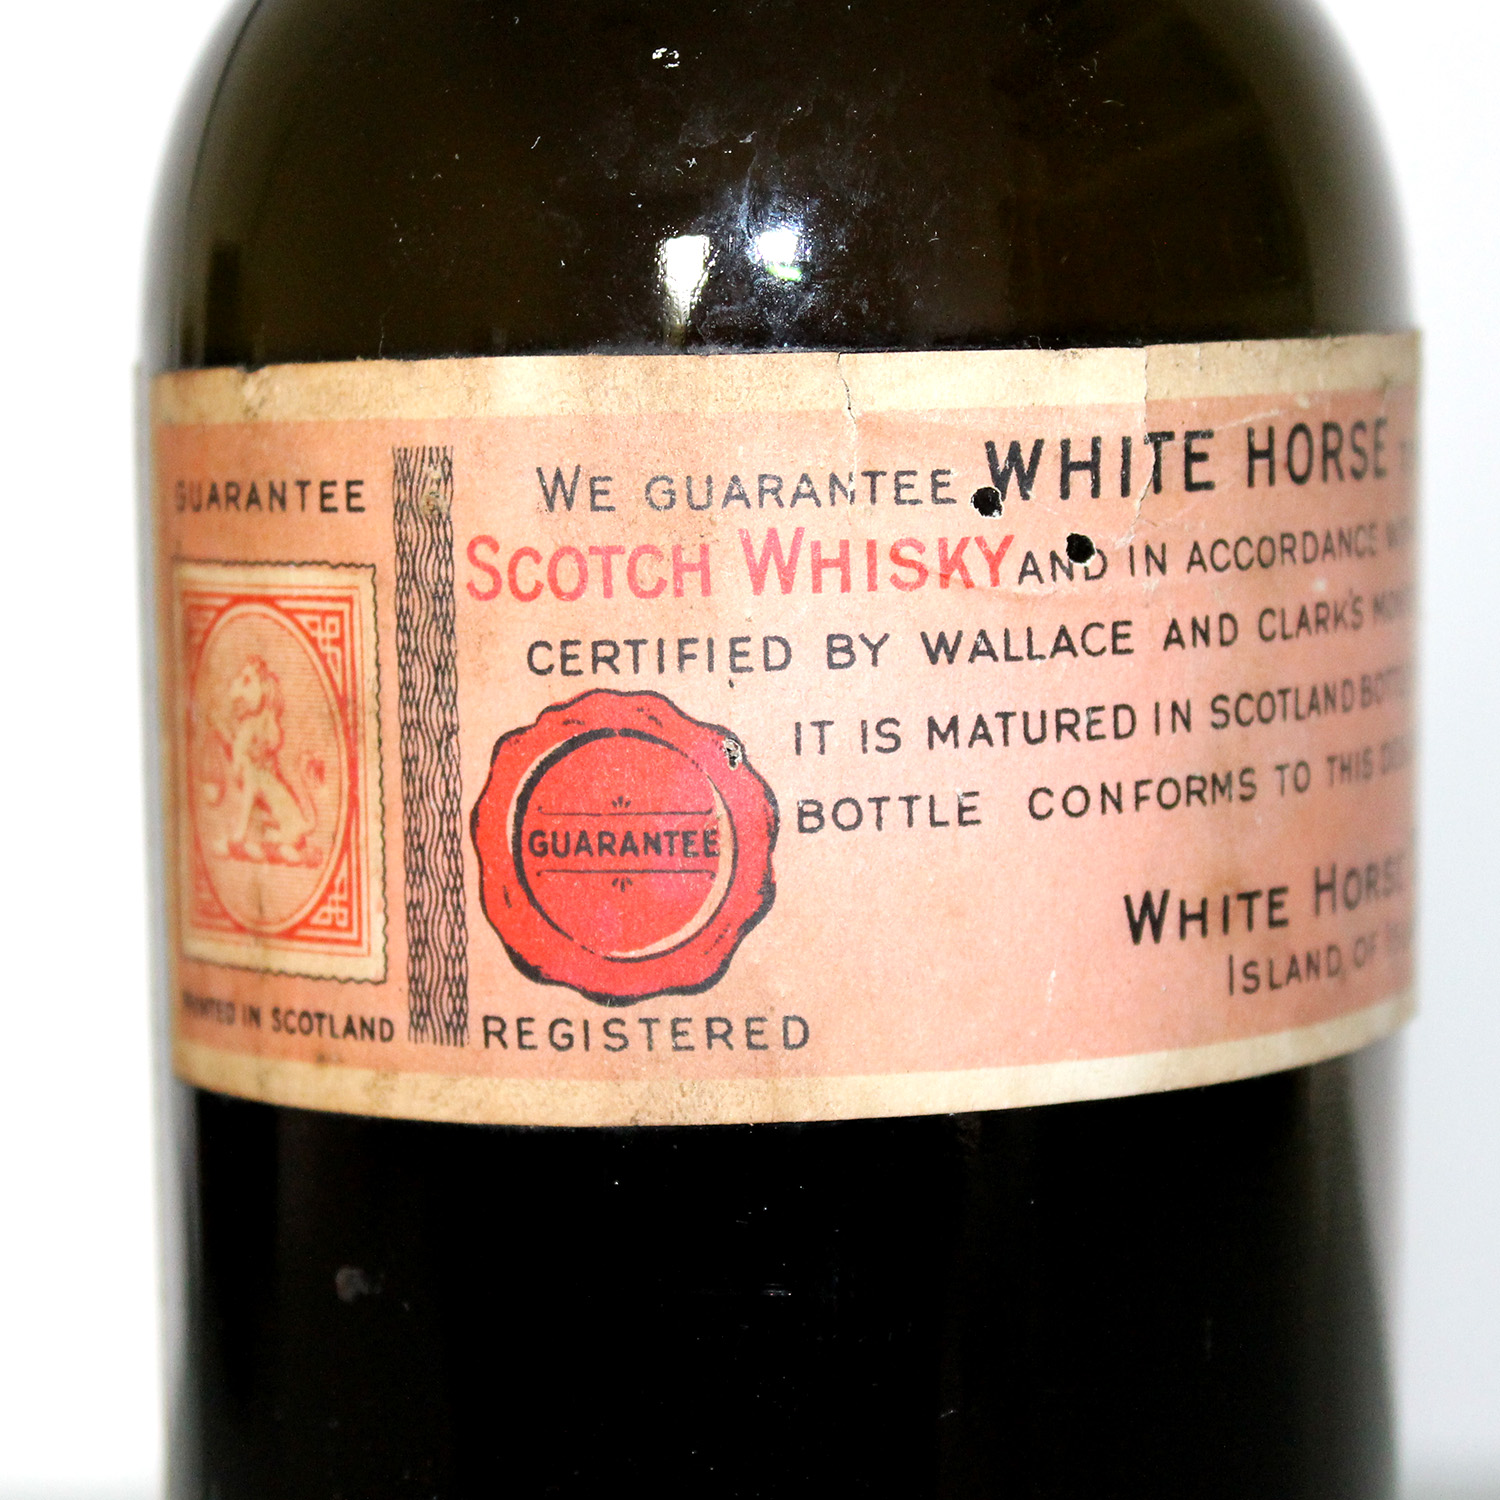 White Horse Cellar Bot 1950s back label